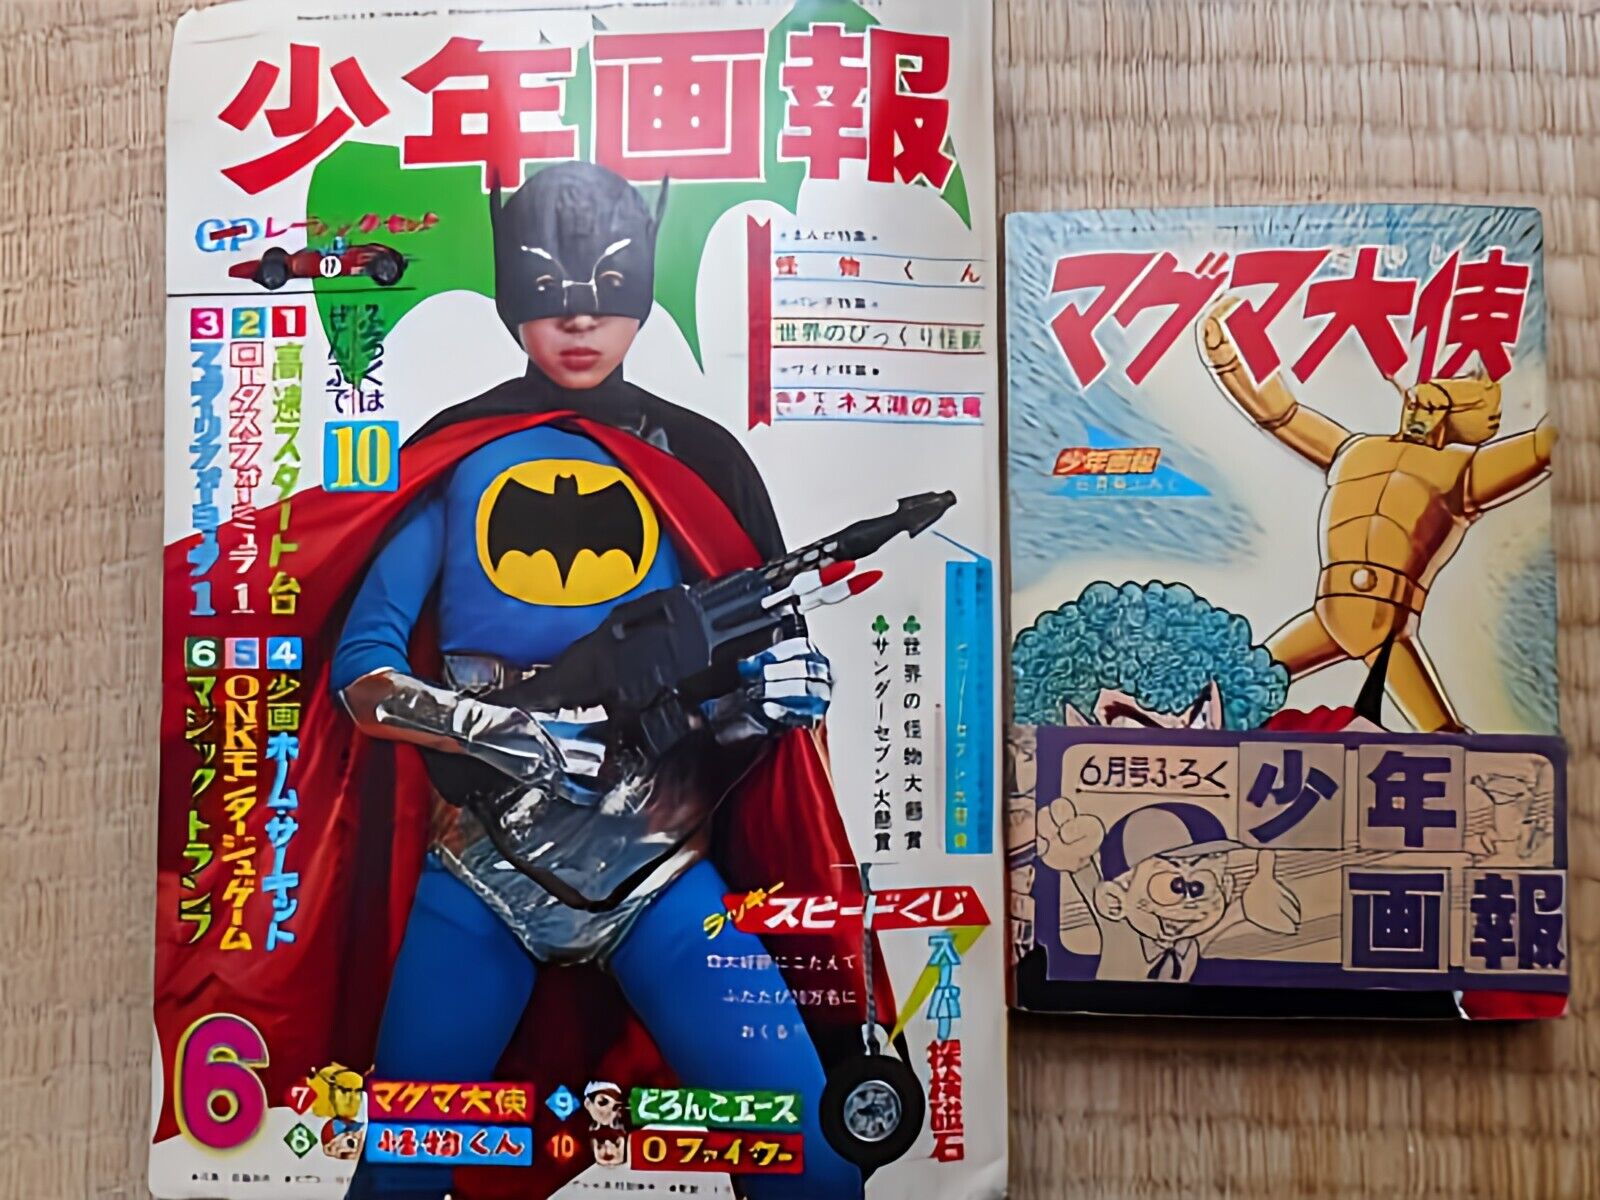 Godzilla Ambassador Magma Fujiko F Fujio etc Japanese Manga Anime 1966 Rare Used